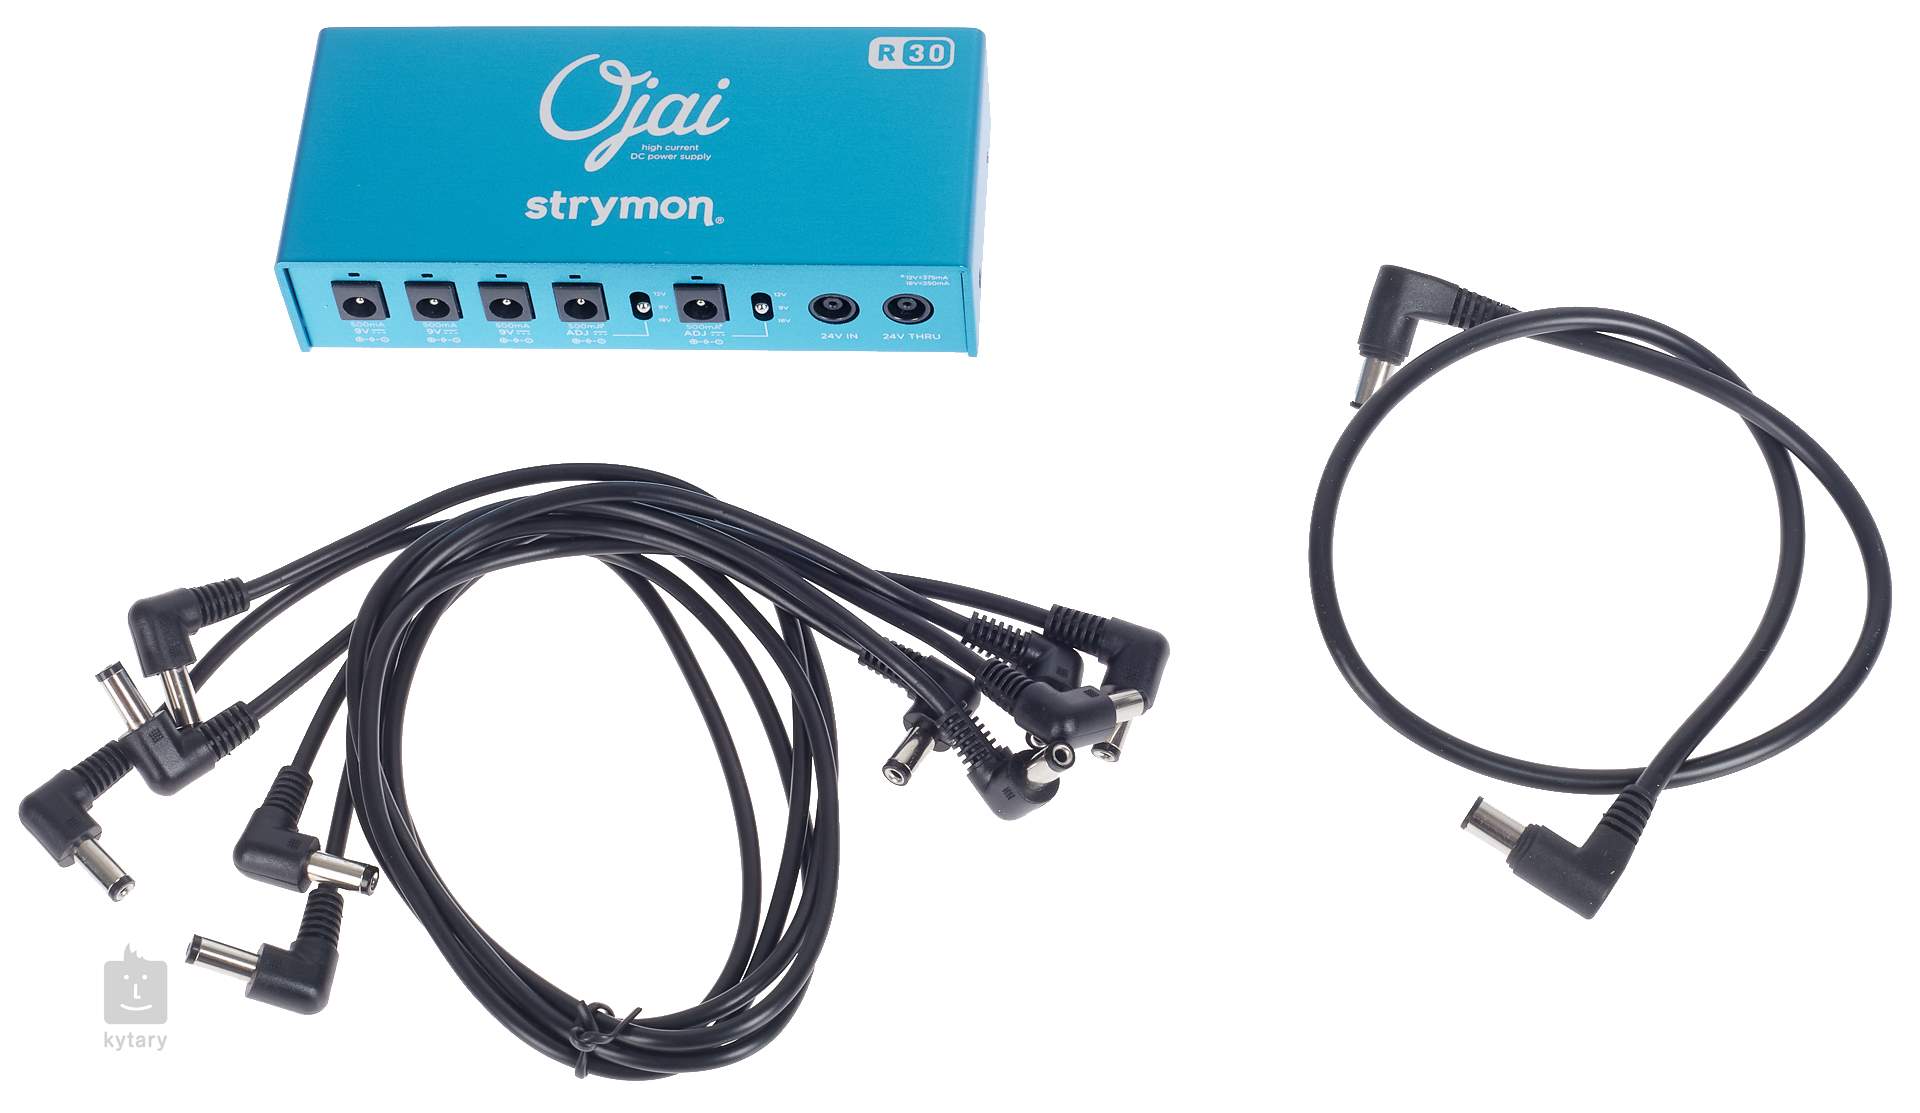 Strymon Ojai R30 Expansion Kit 器材 | thephysicaleducator.com